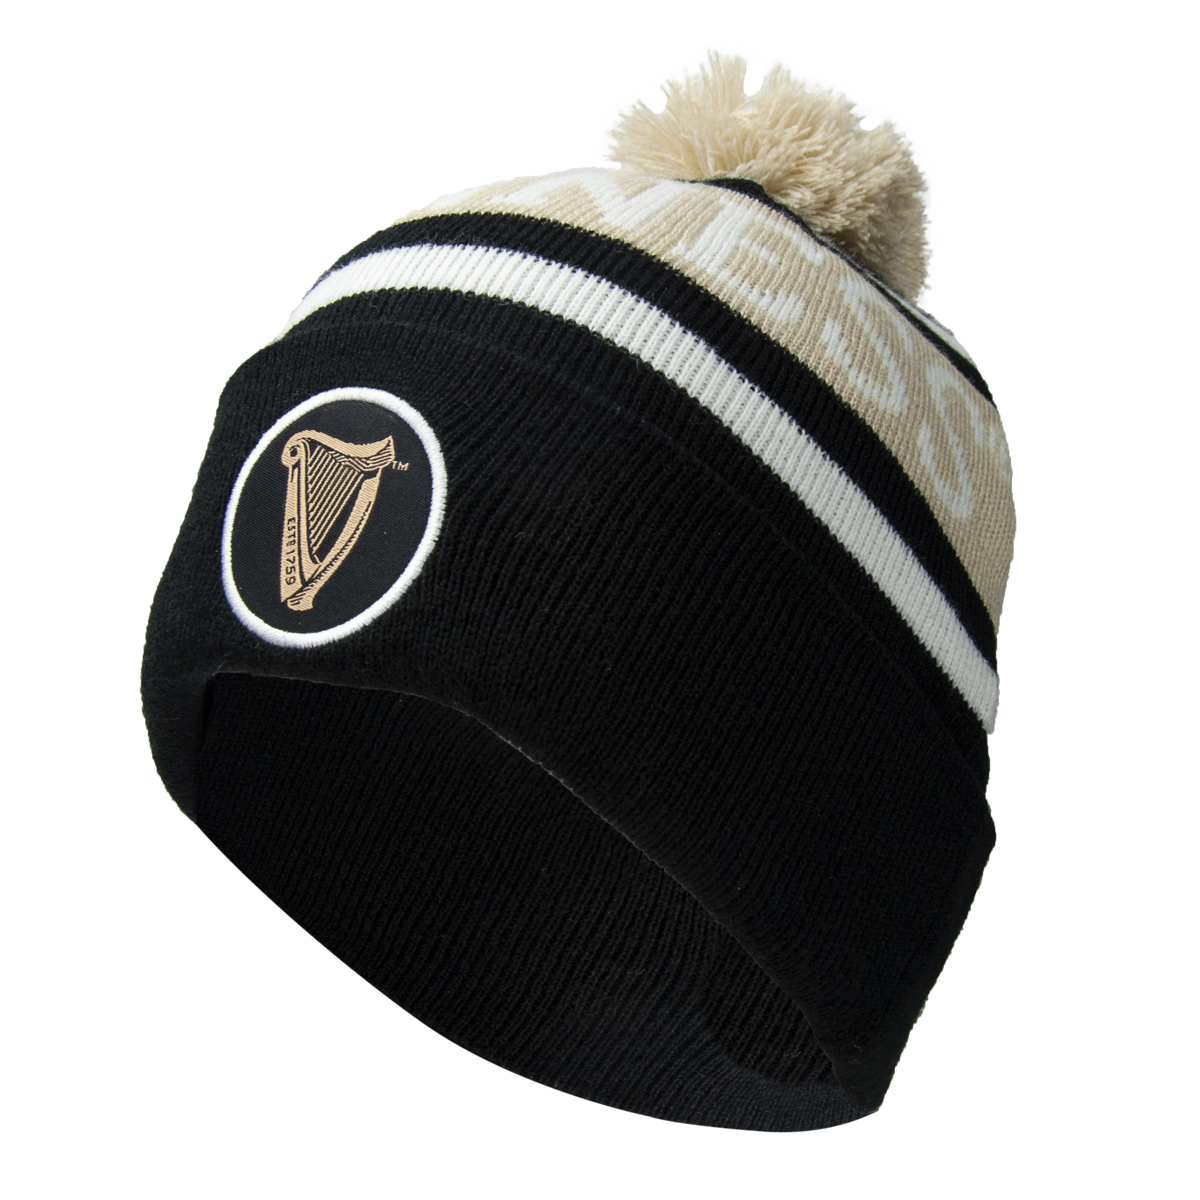 Product image for Irish Hats | Guinness Black & White Premium Beanie Hat